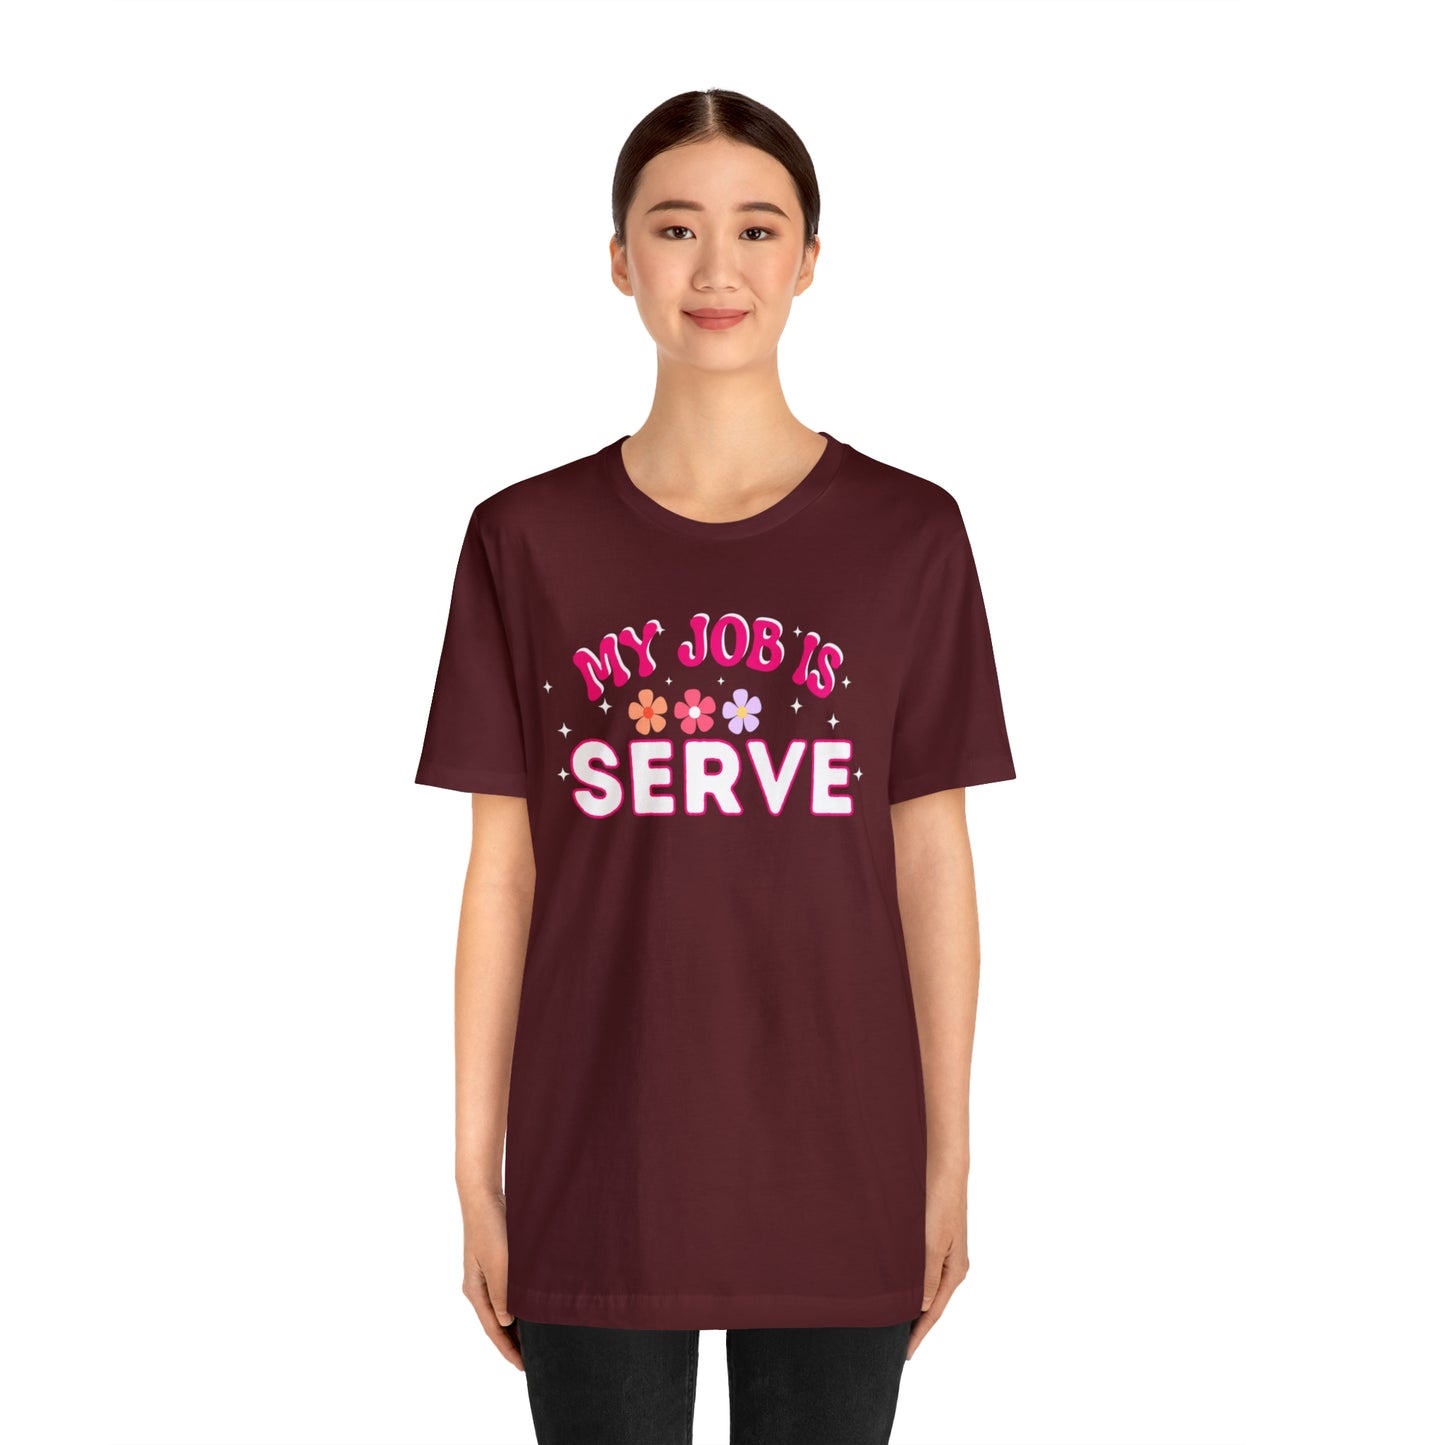 My Job is Serve Shirt for Military Customer Service Waiter/Waitress Public Servant, Hotel Concierge, Caterer, Flight Attendant, Bartender Barista